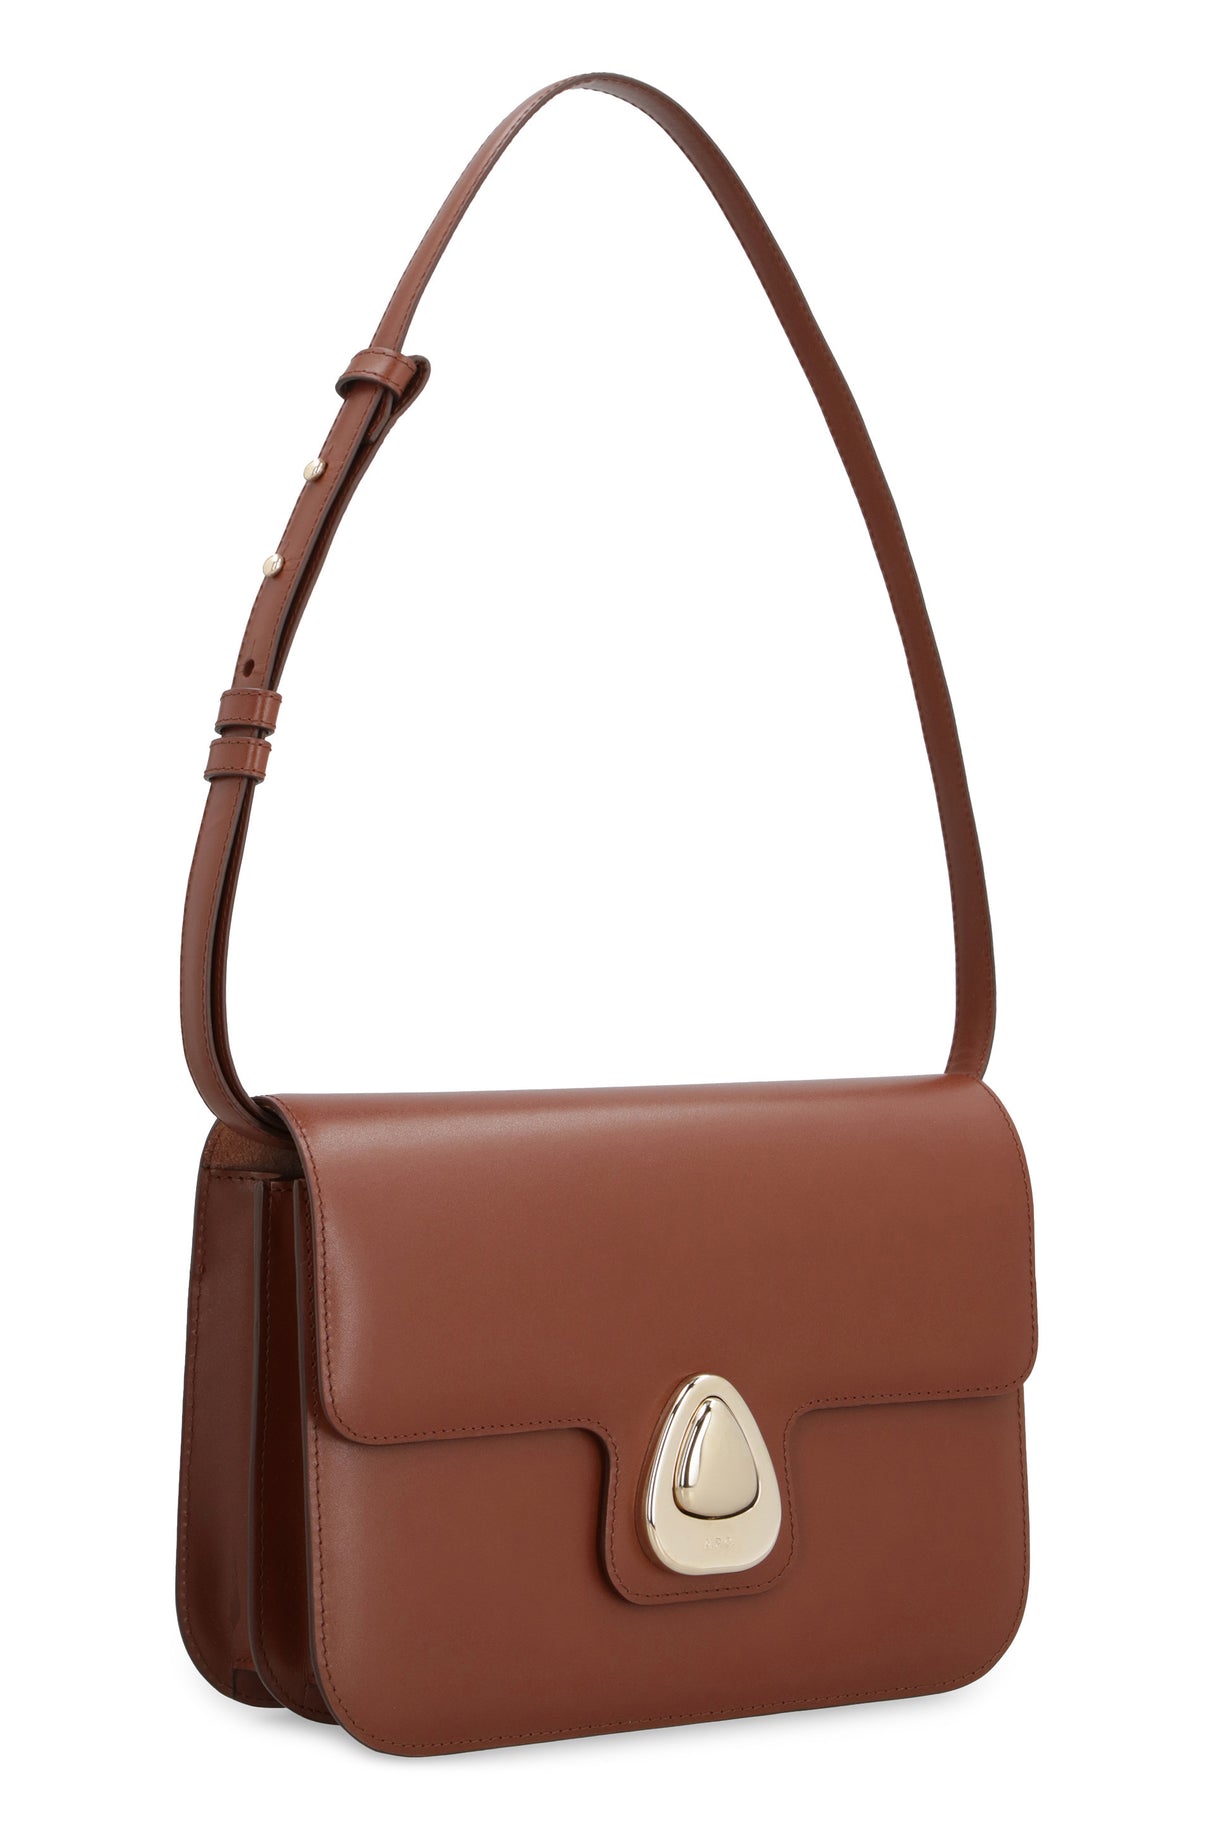 A.P.C. Smooth Calfskin Mini Handbag with Gold-Tone Hardware, Saddle Brown – 21.5 x 15 x 7 cm